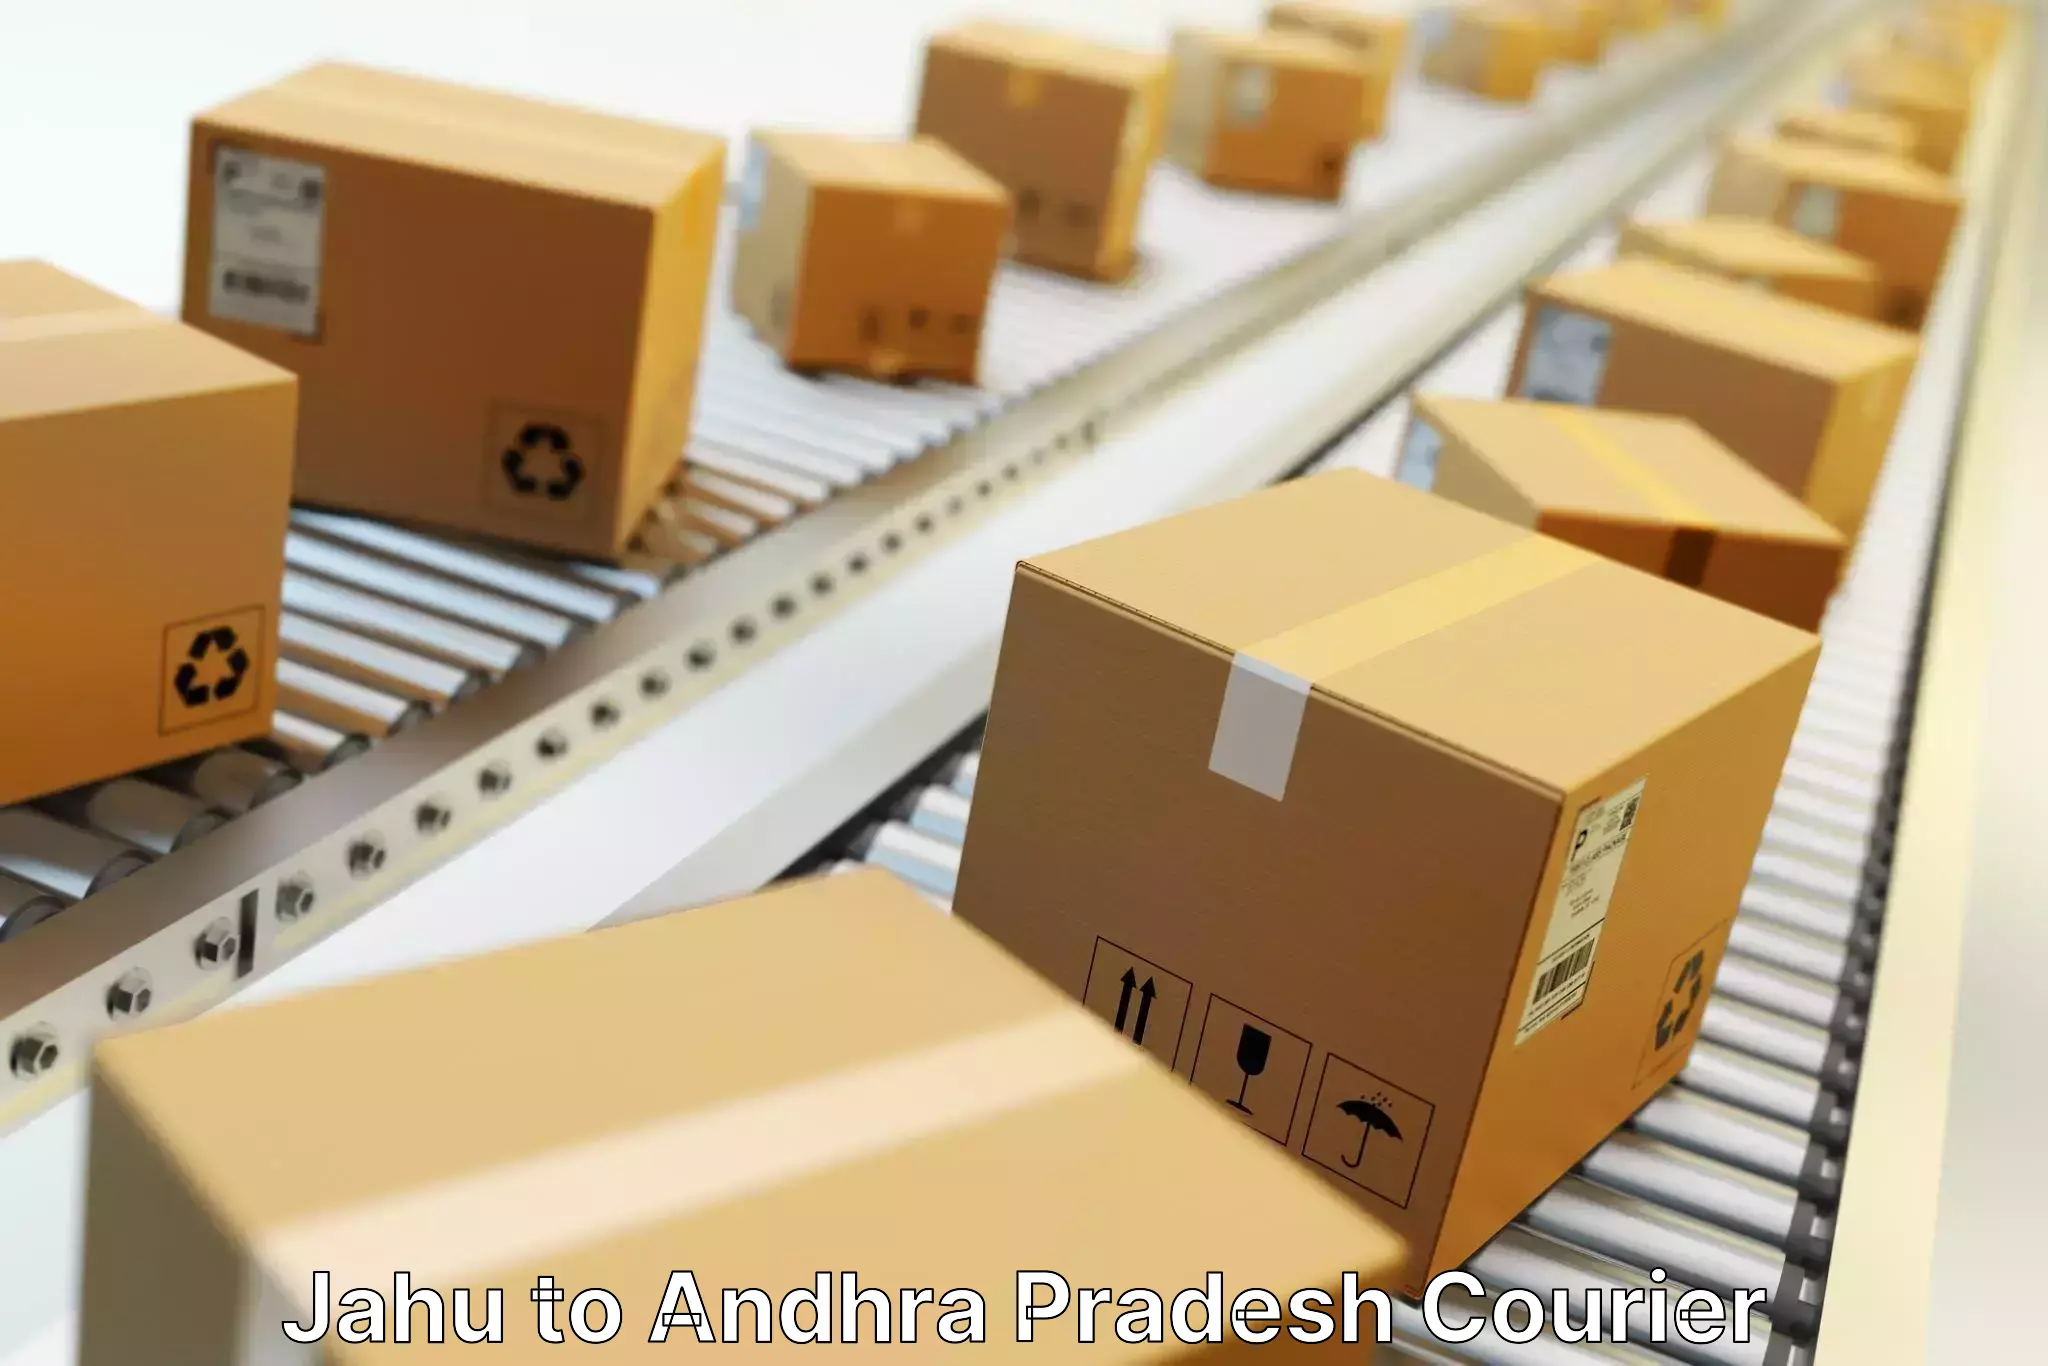 Modern delivery technologies Jahu to Gokavaram